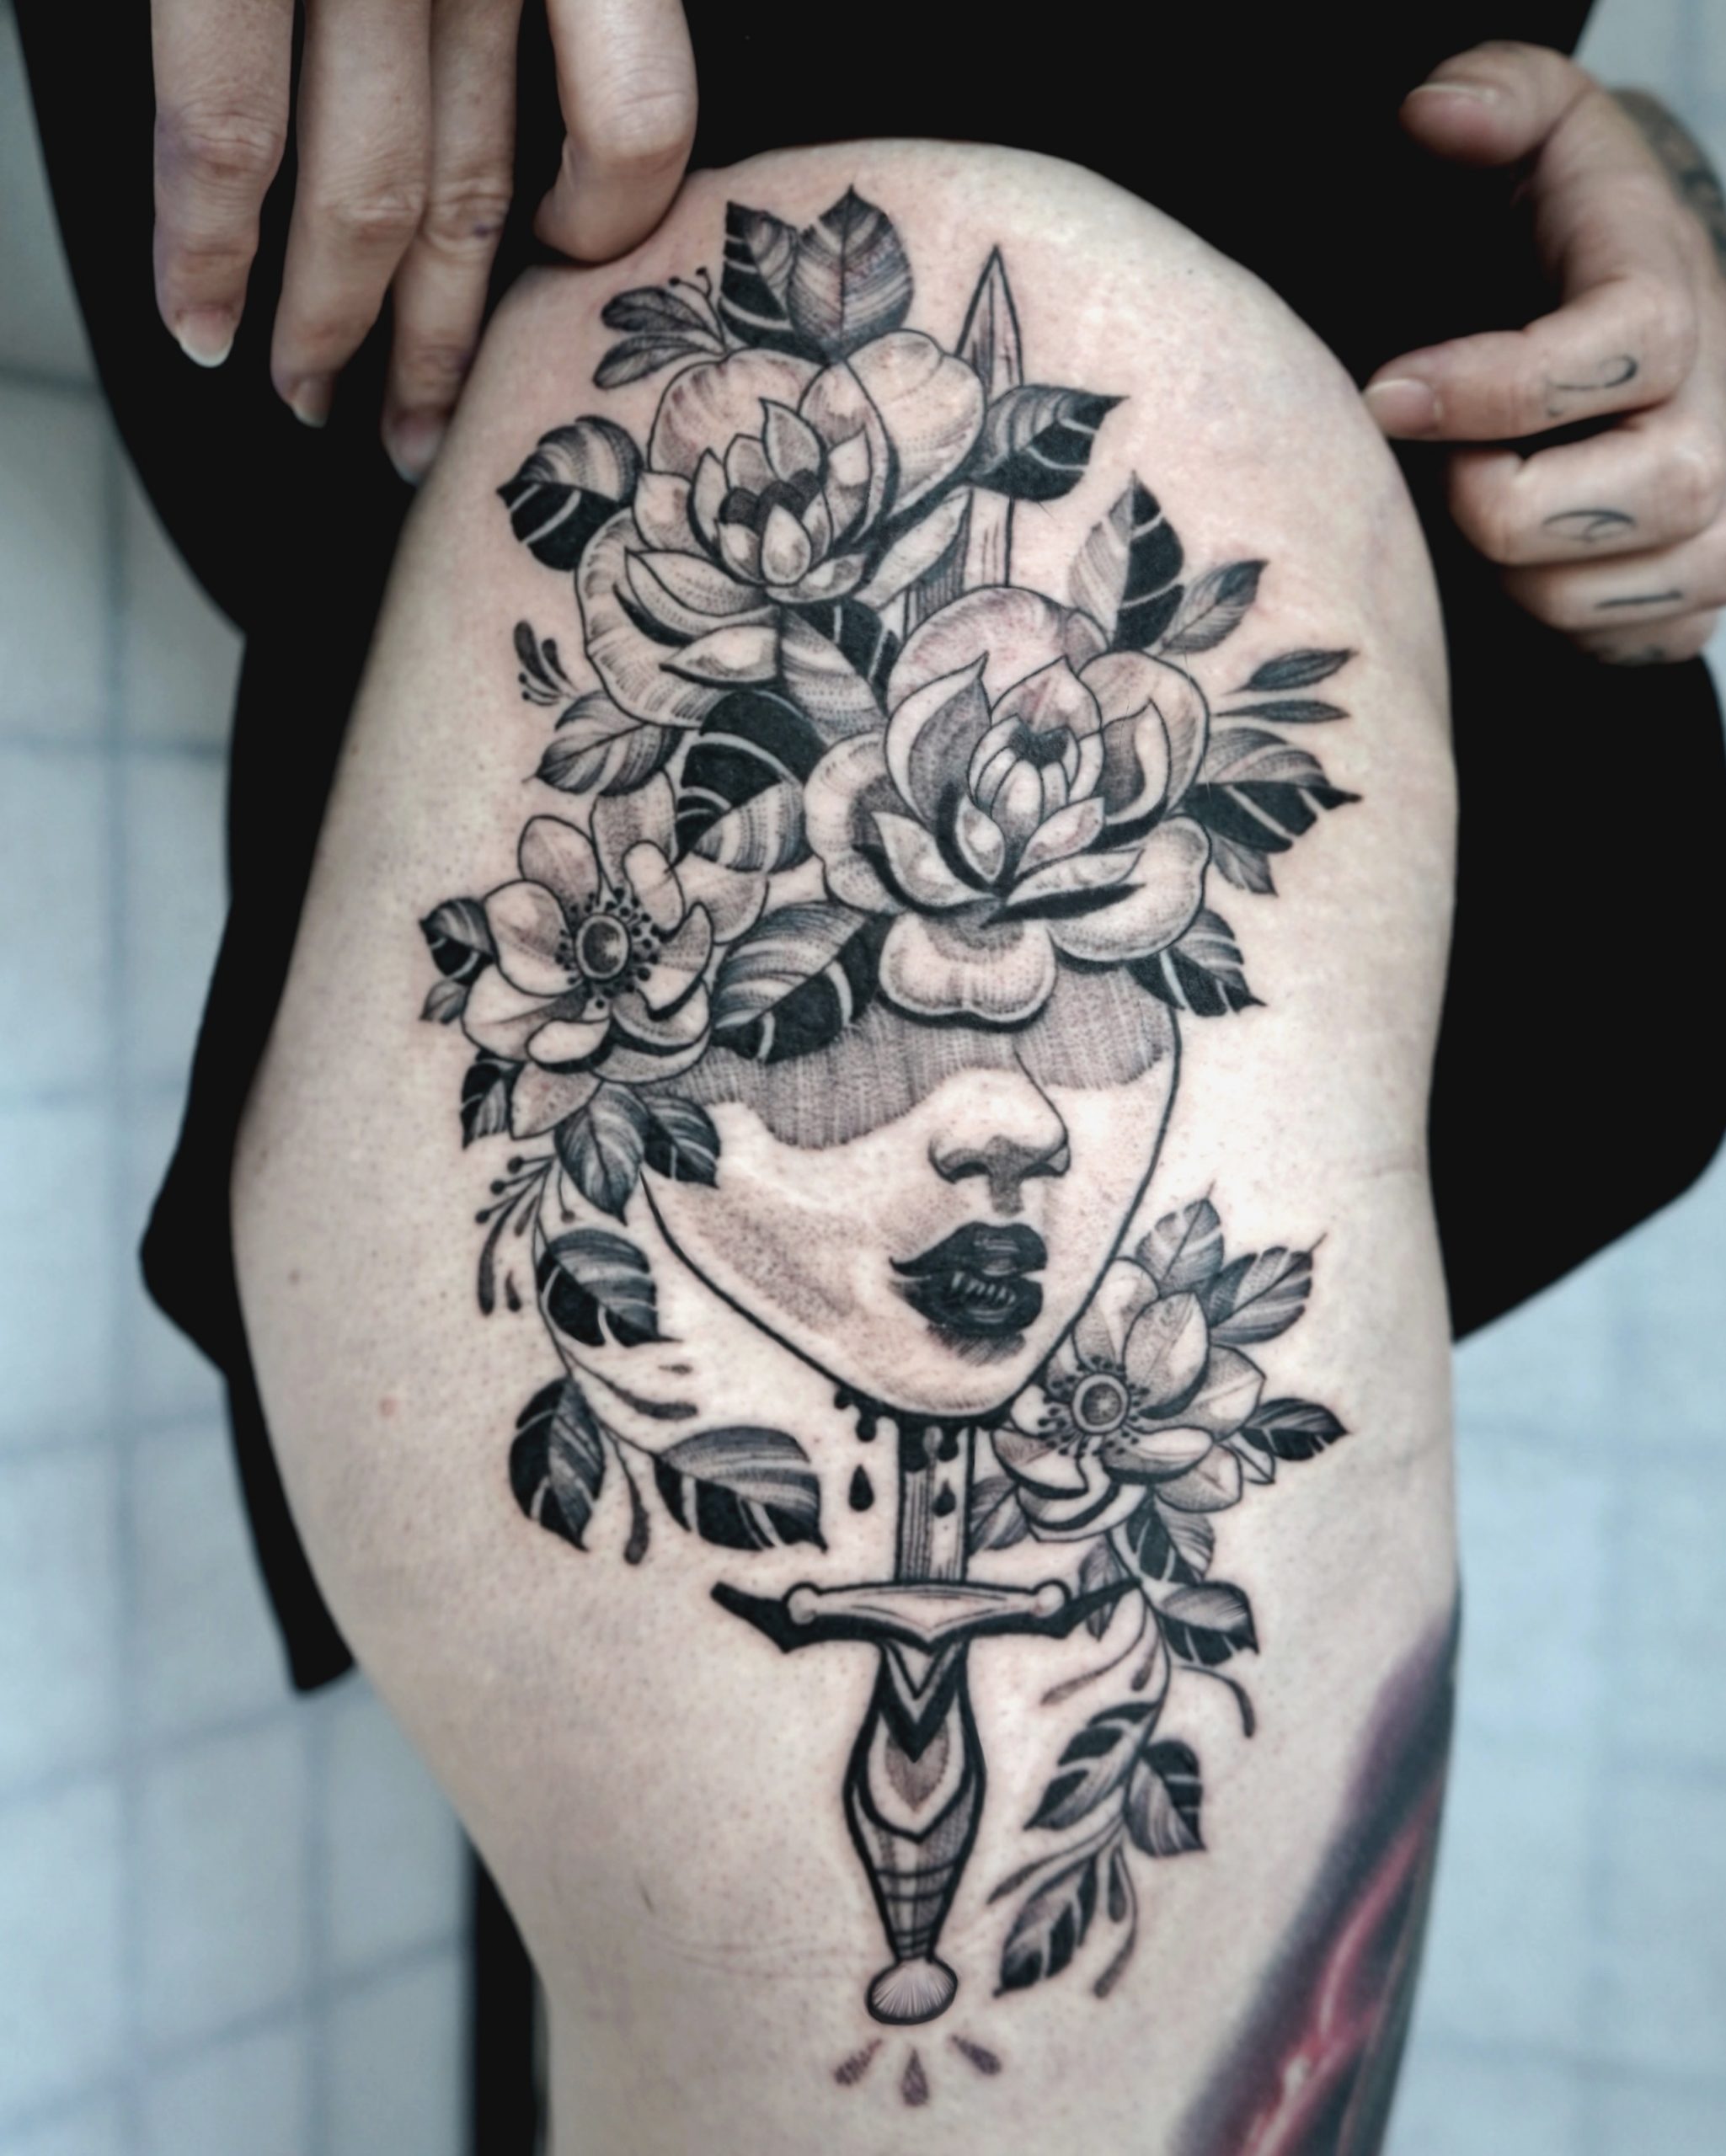 Woman-dagger-flowers-tattoo-abyss